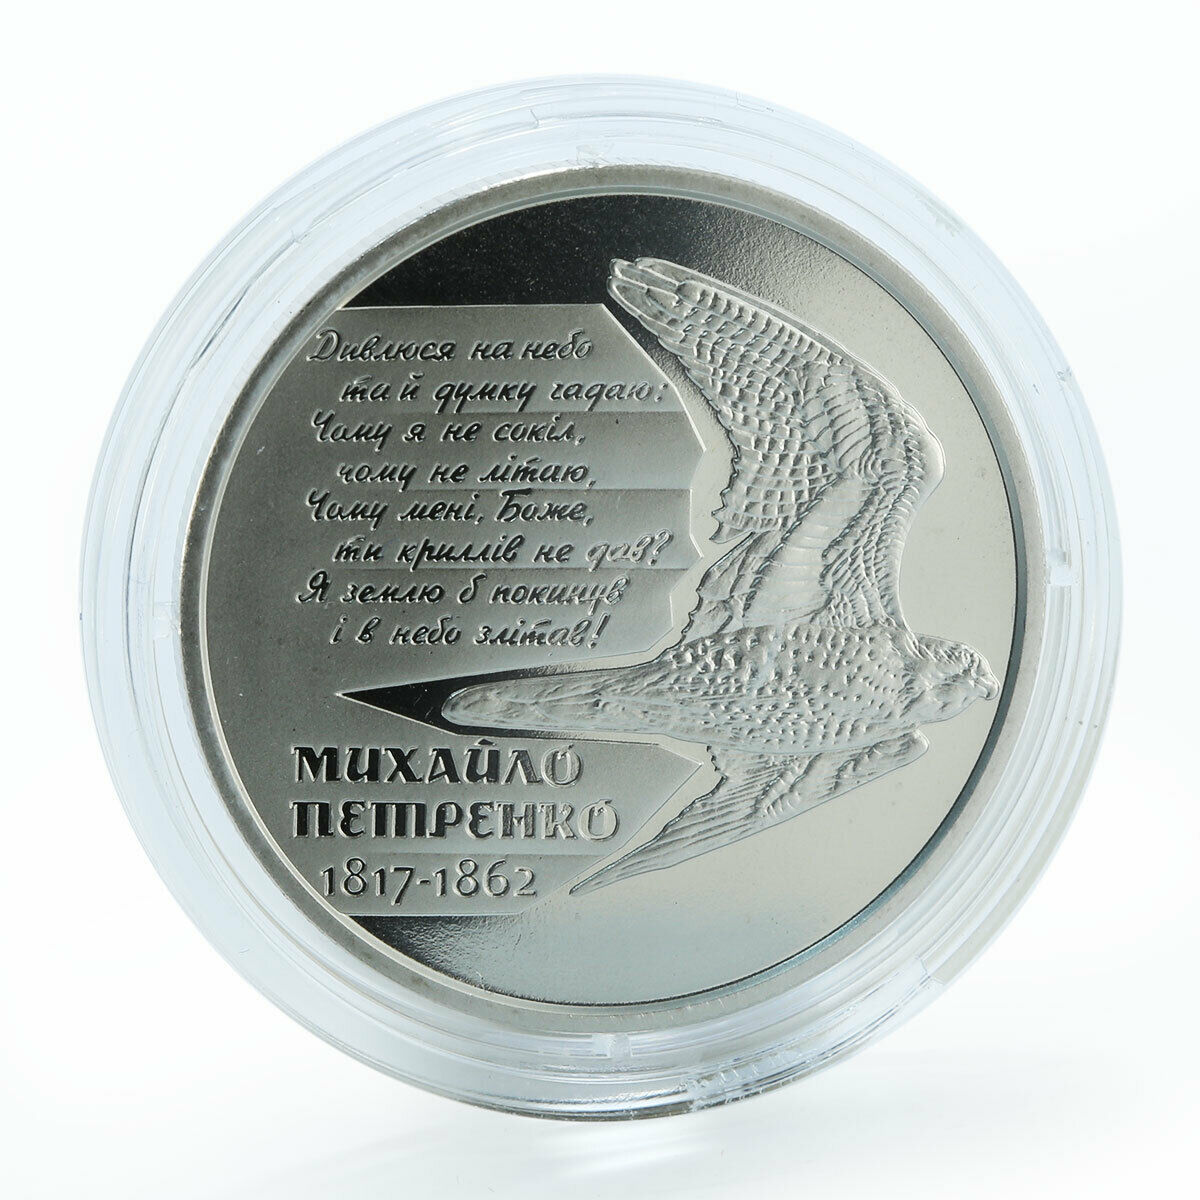 Ukraine 2 hryvnia Mykhailo (Mikhail) Petrenko Outstanding poet nickel coin 2017